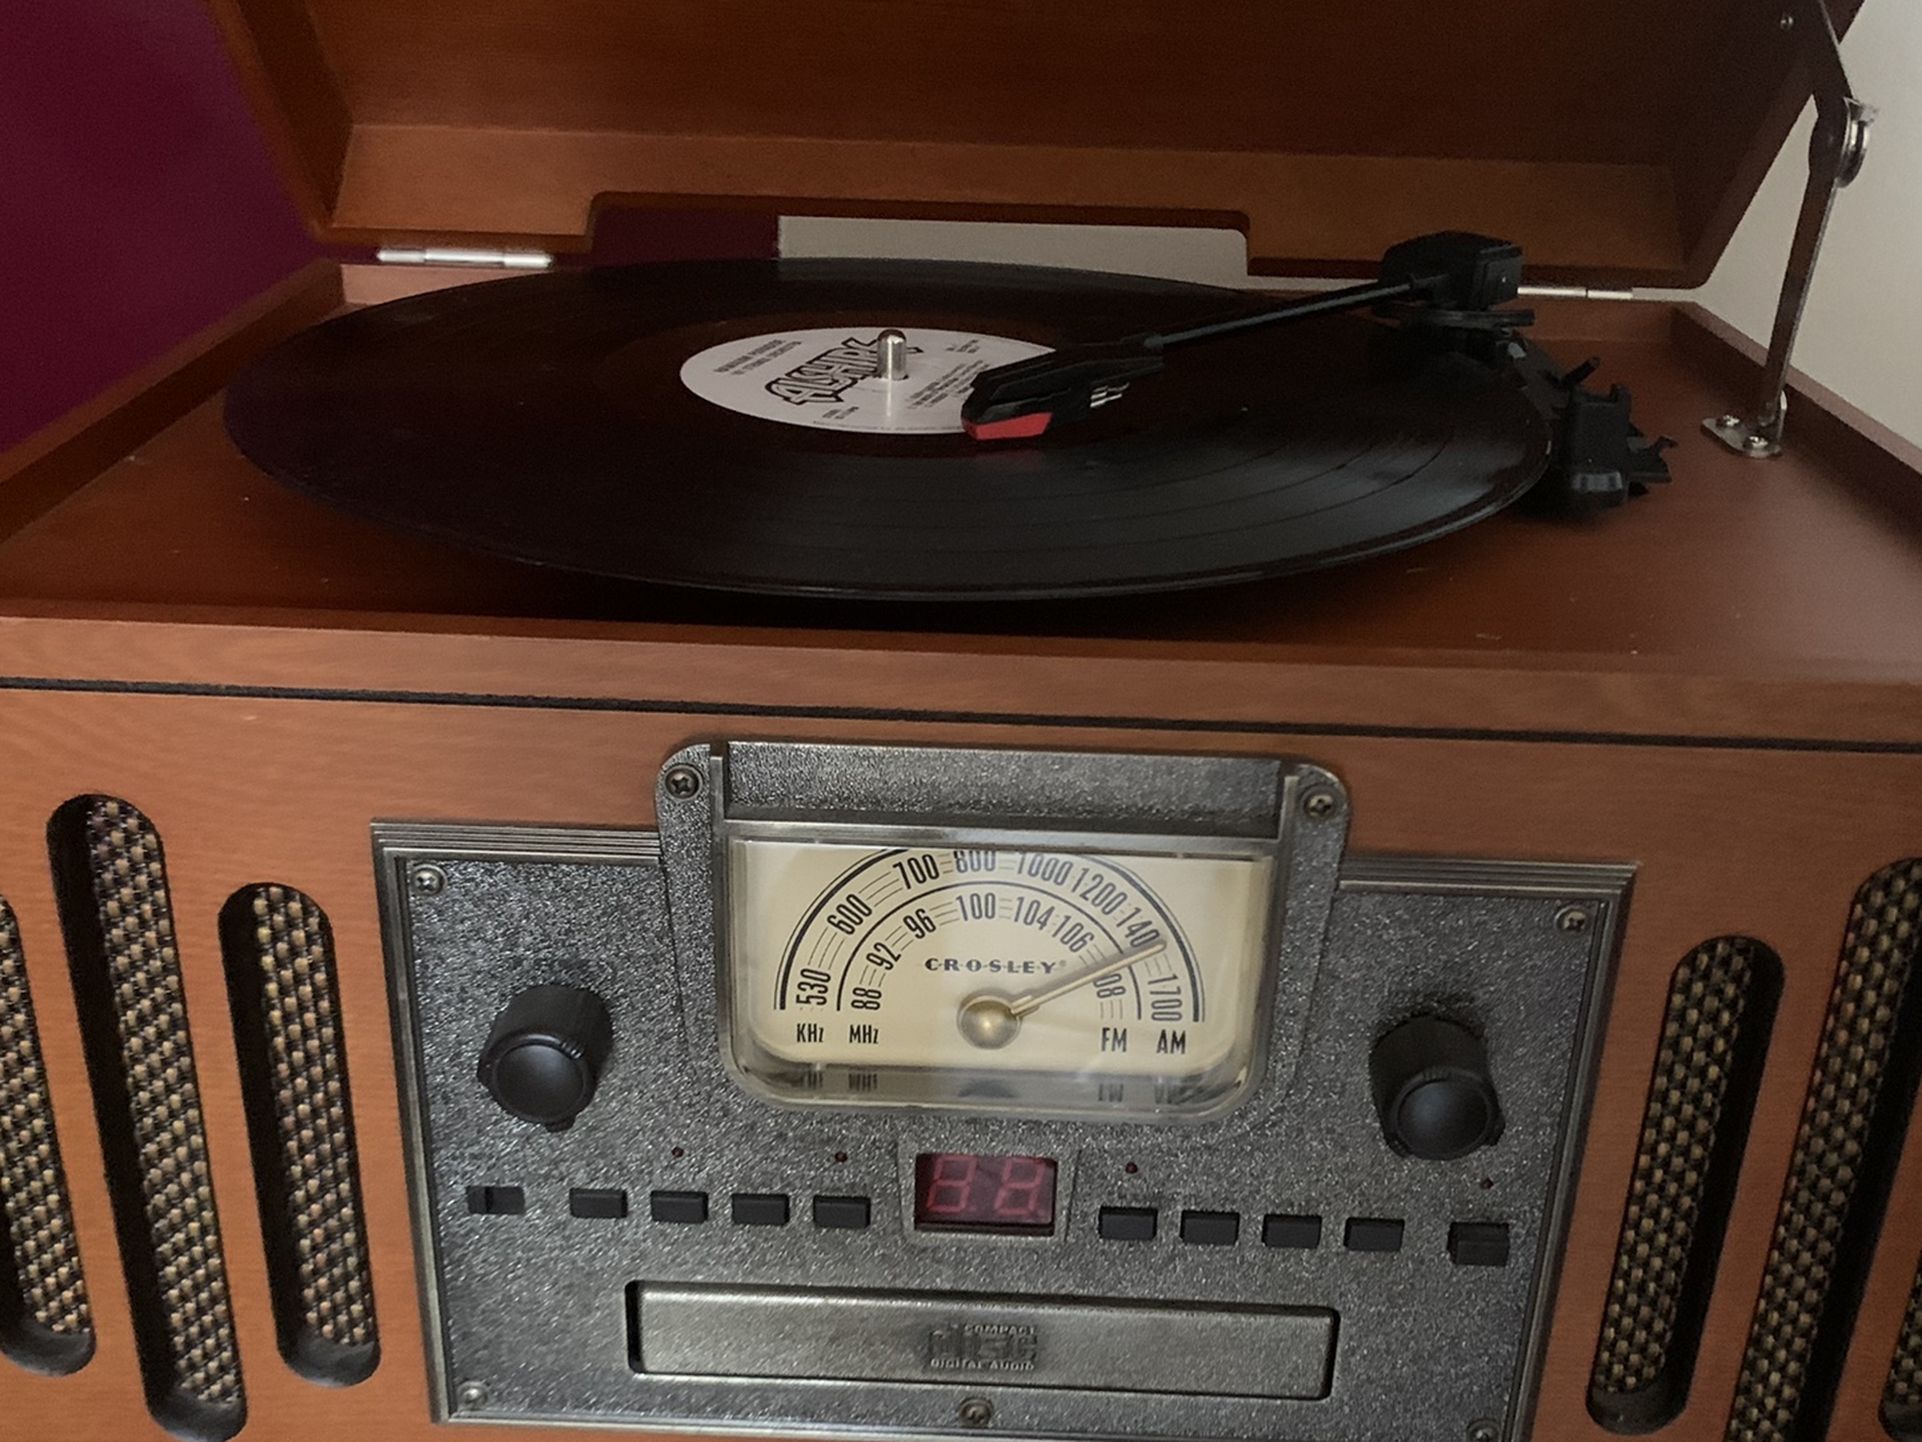 Record /CD player am/fm radio. Somo vinyl records included